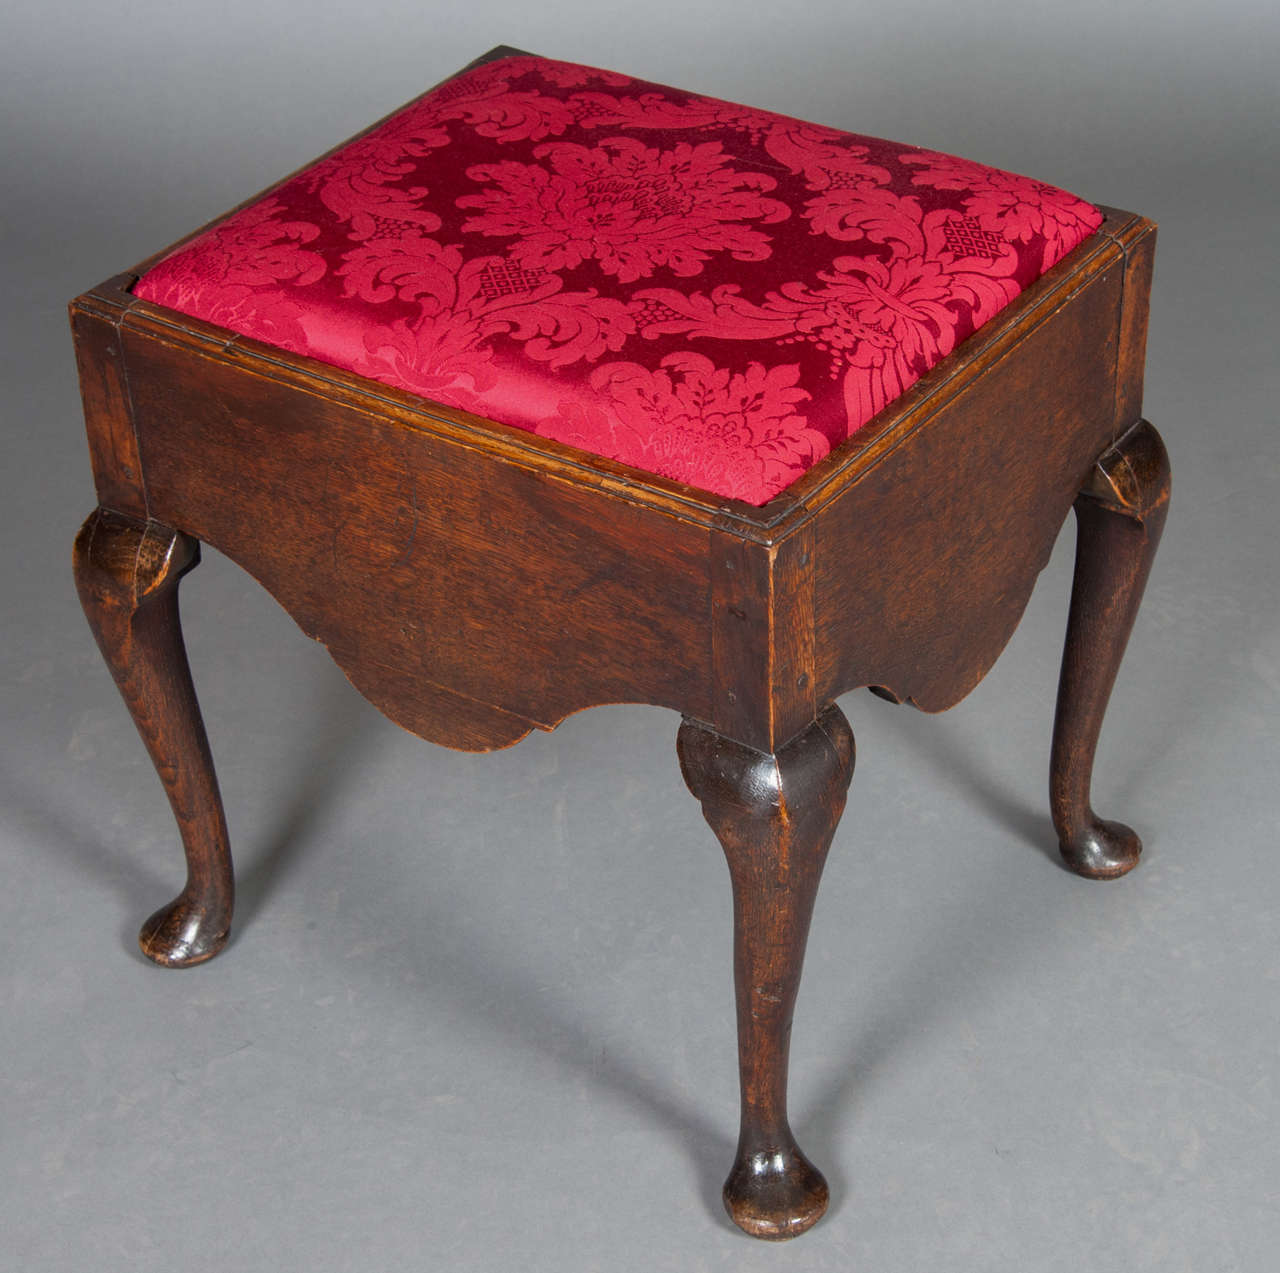 A fine mid-18th century oak dressing stool on cabriole legs and pad feet.